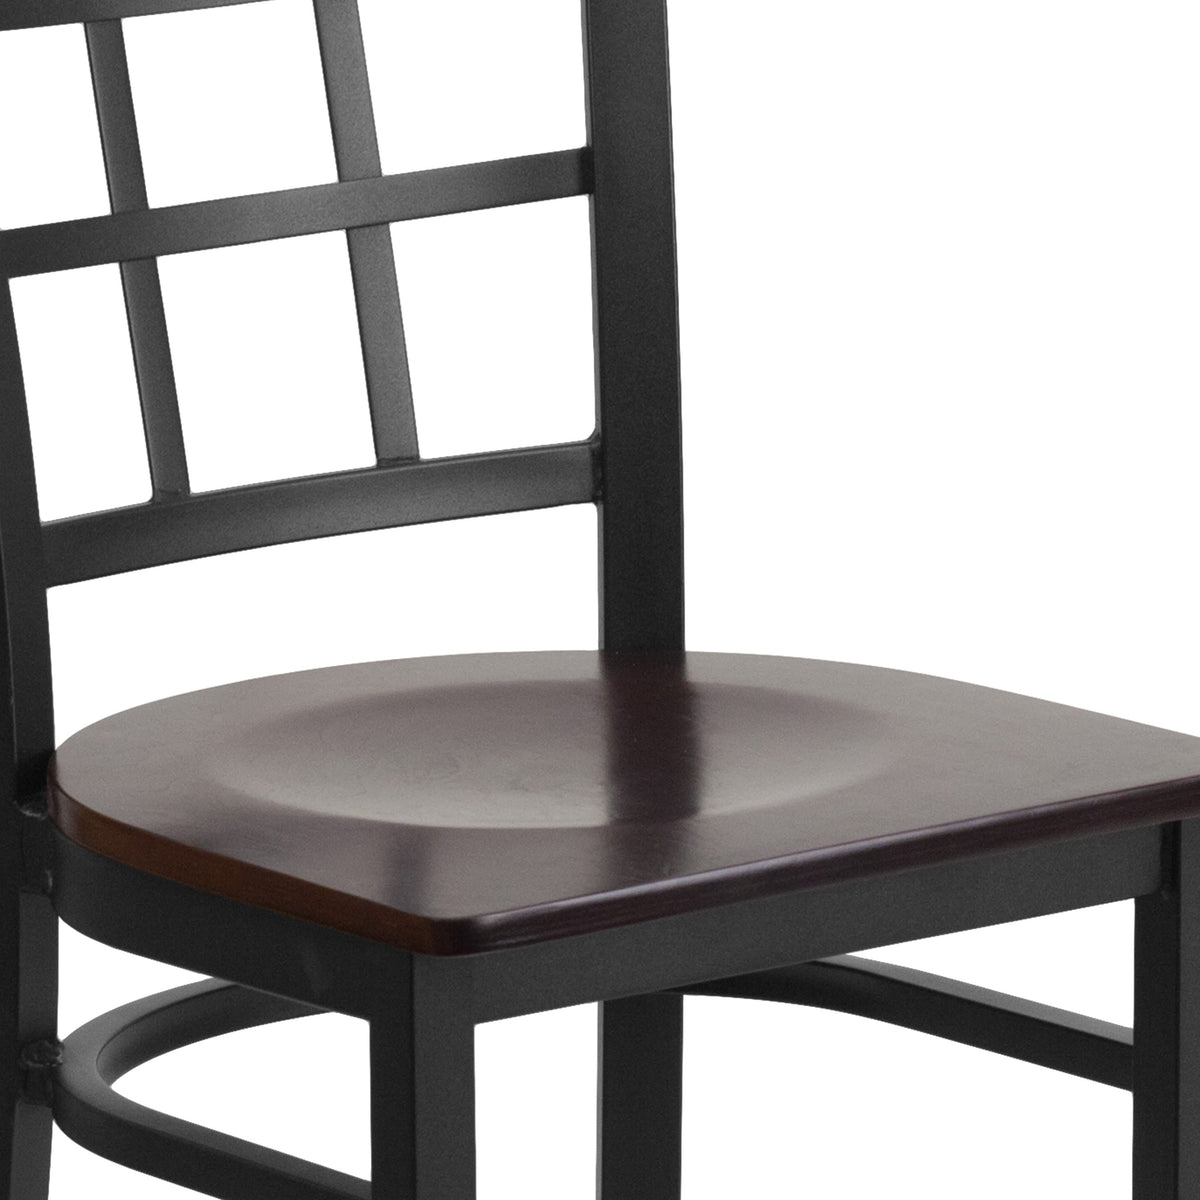 Walnut Wood Seat/Black Metal Frame |#| Black Window Back Metal Restaurant Chair - Walnut Wood Seat